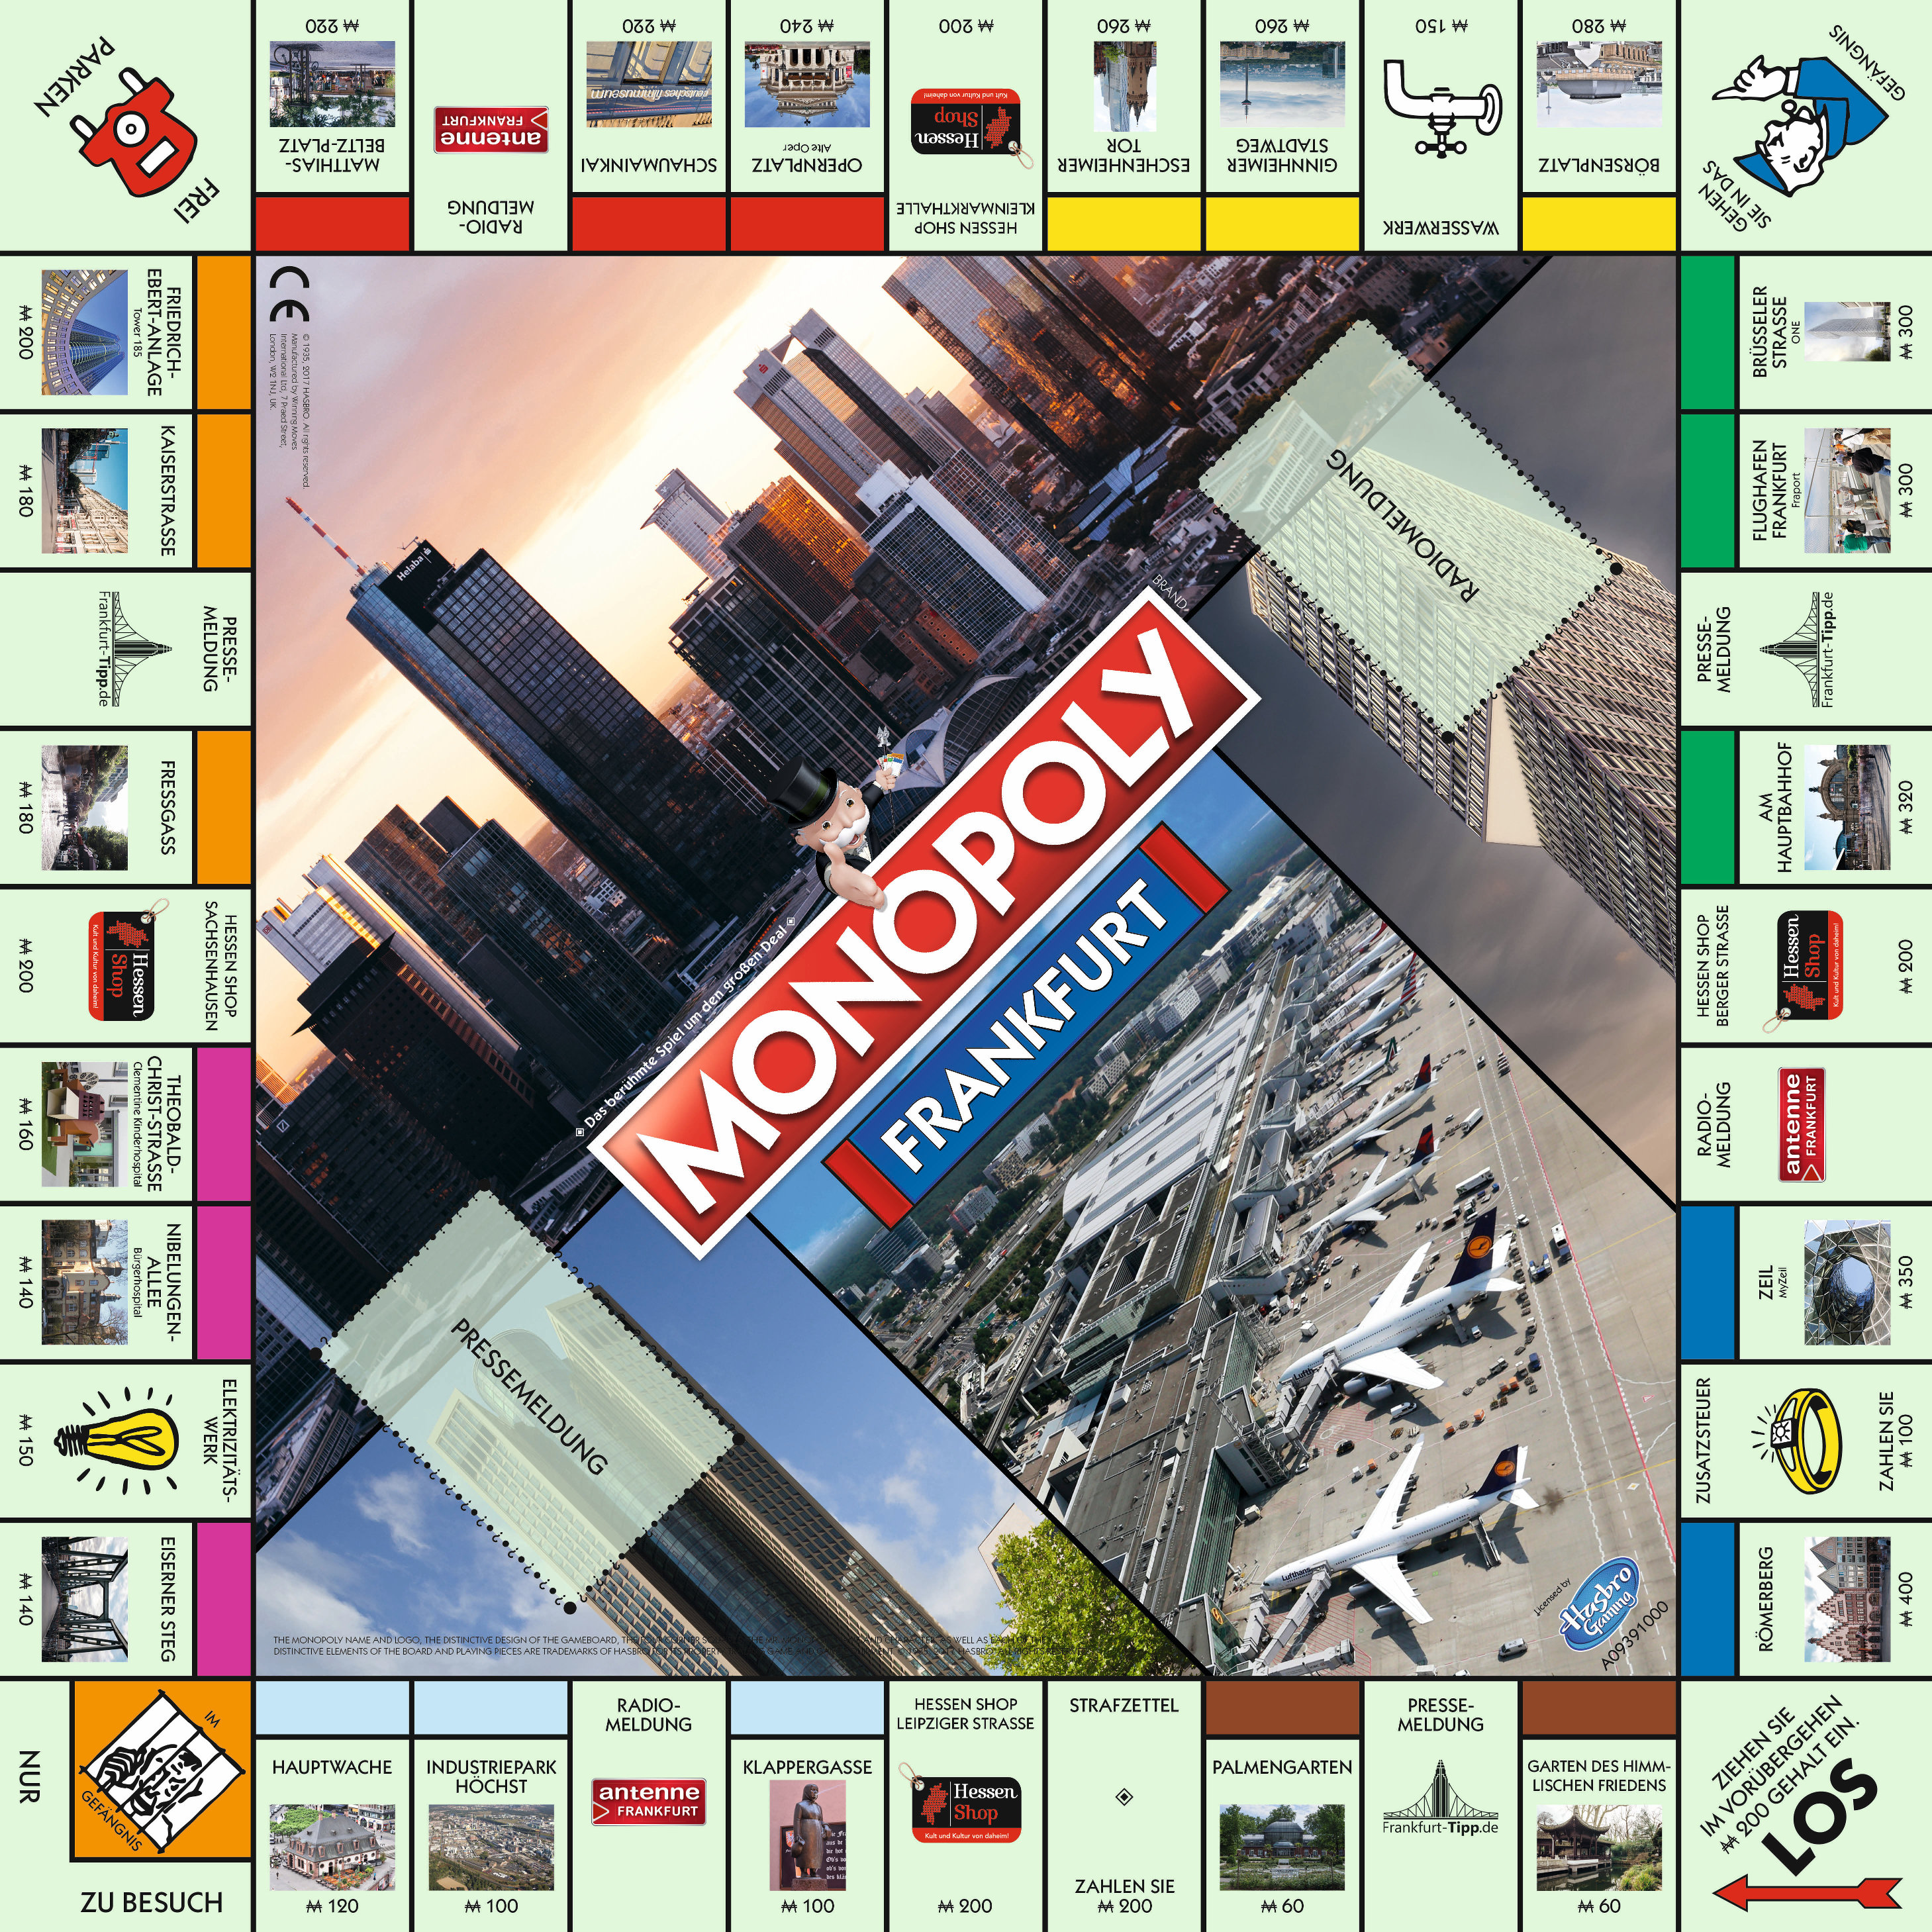 Monopoly Frankfurt